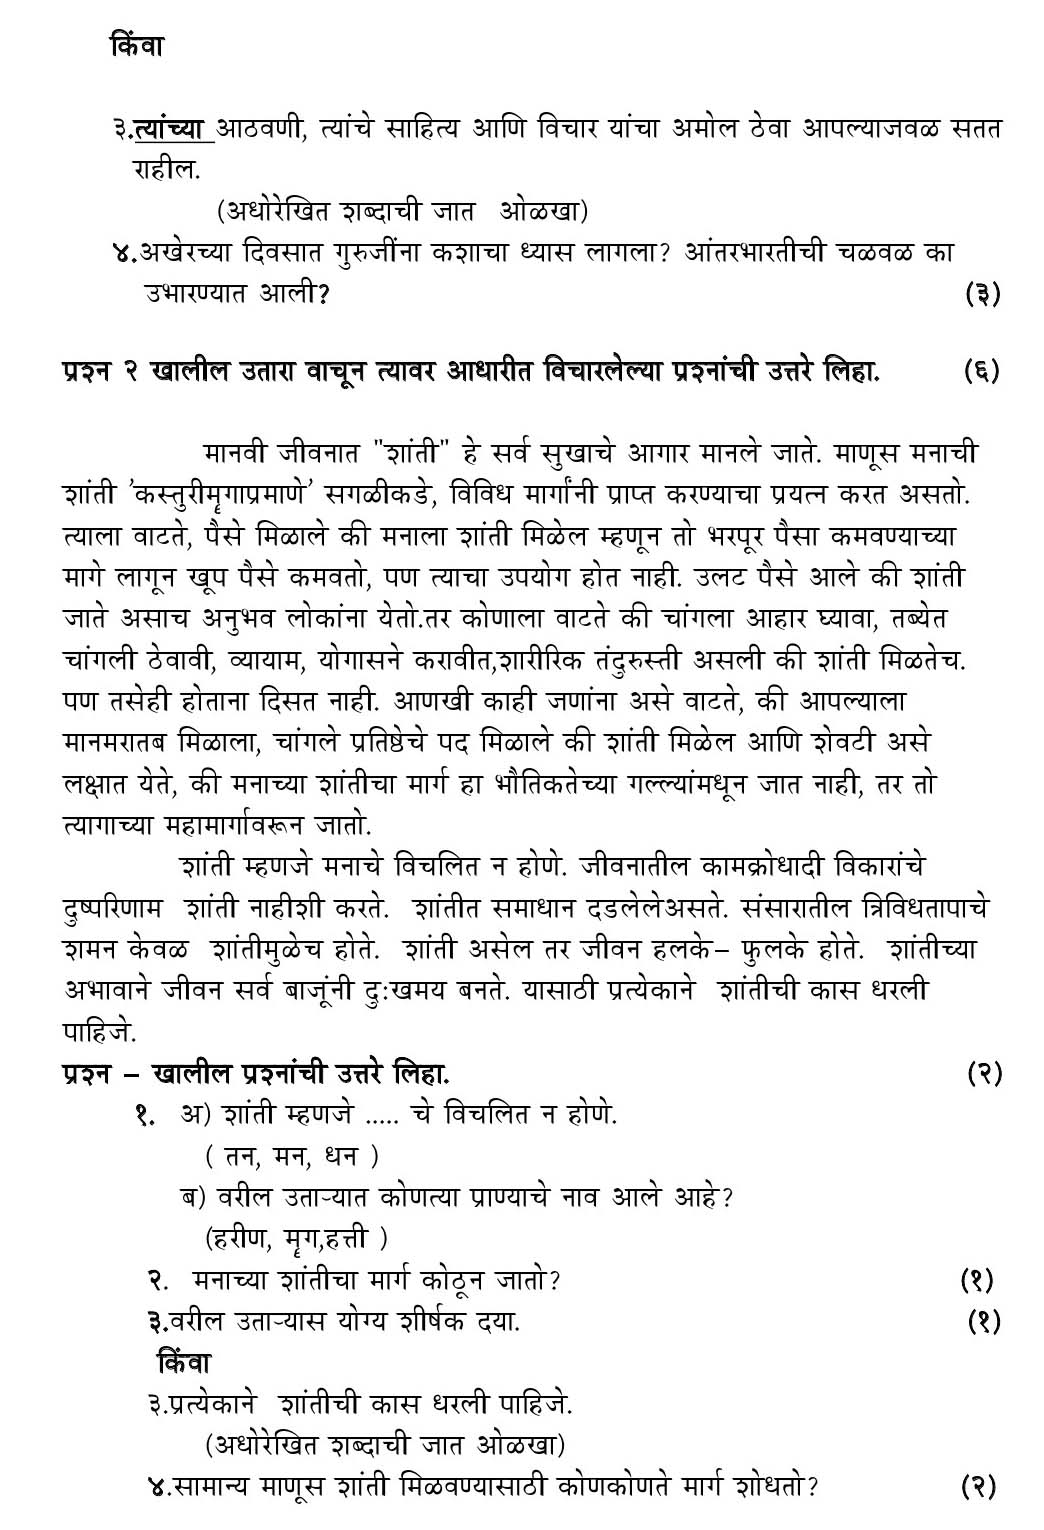 Marathi CBSE Class X Sample Question Paper 2018-19 - Image 2